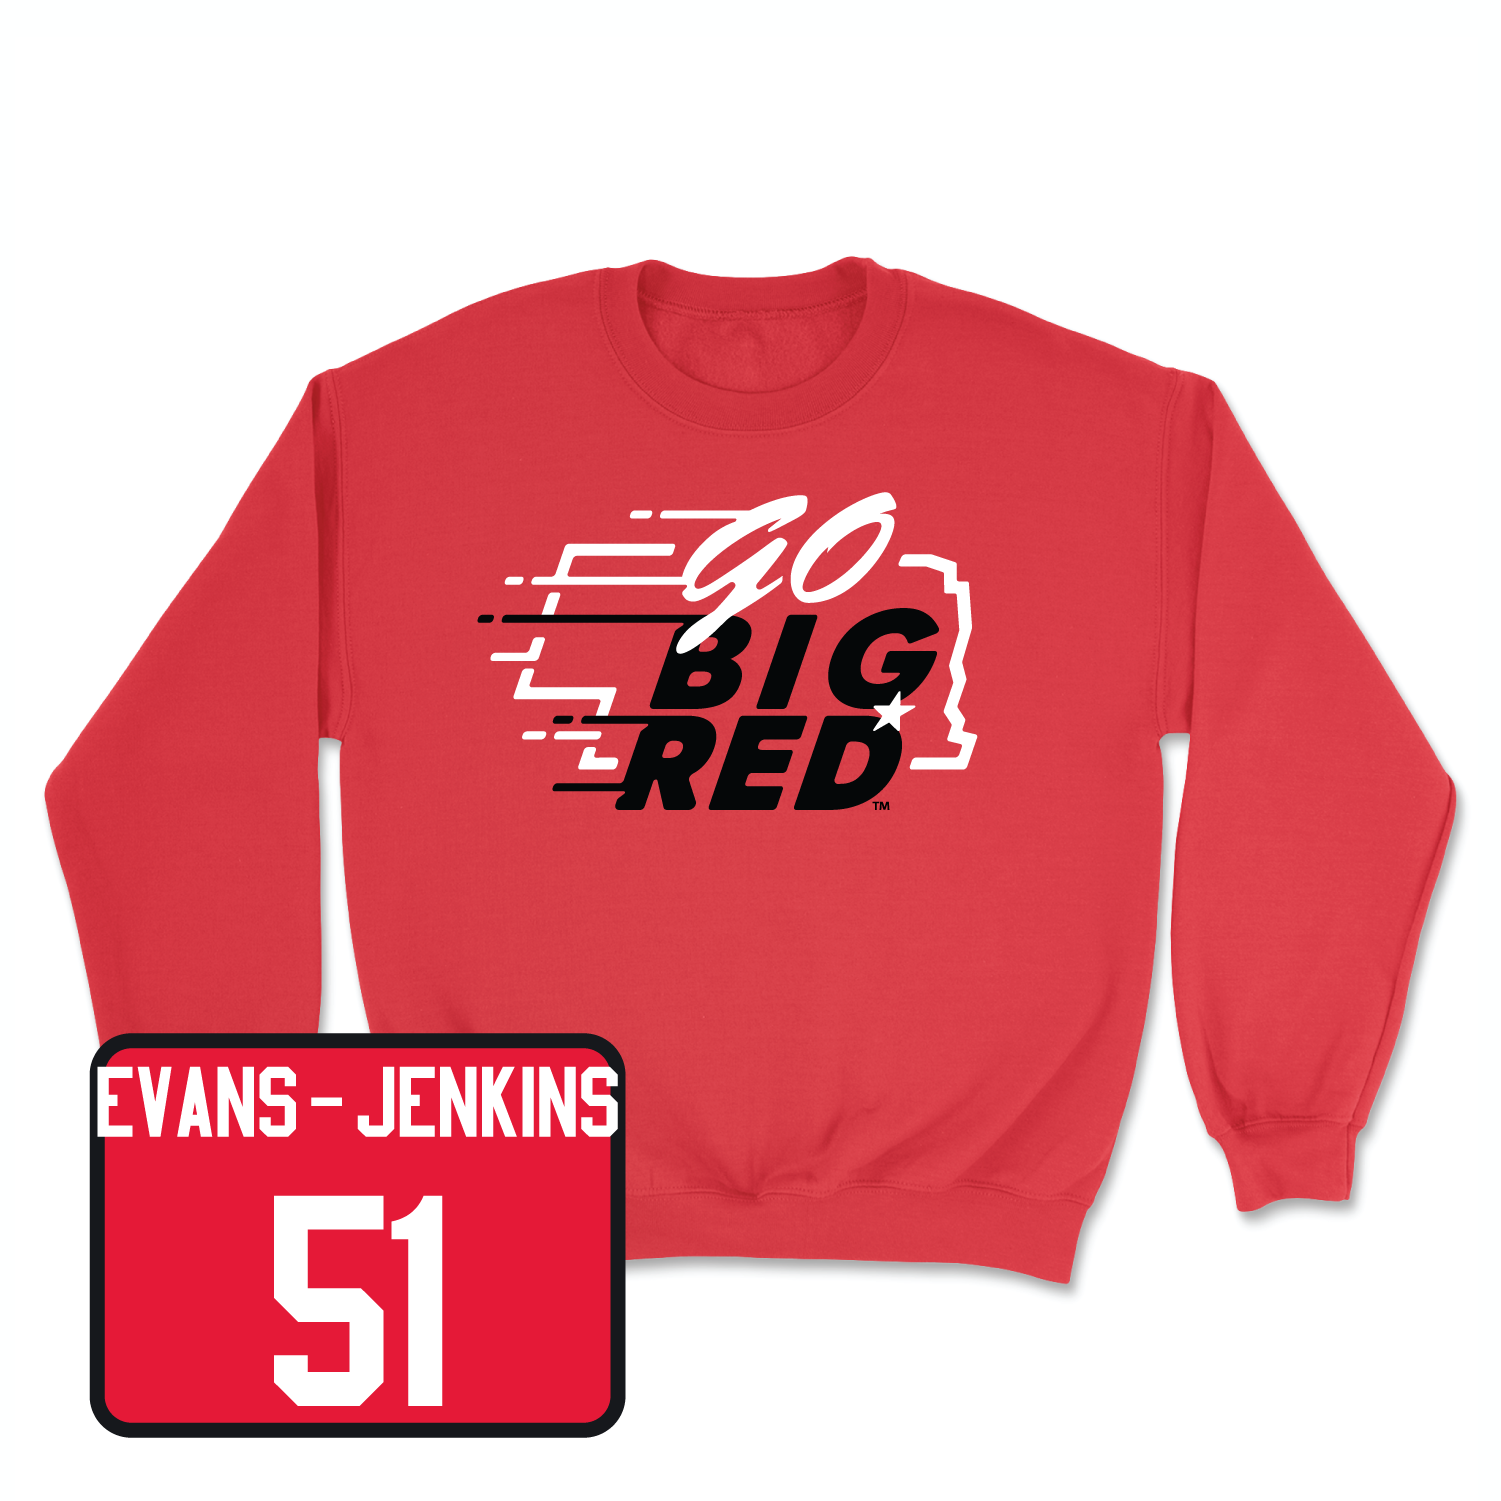 Red Football GBR Crew 6 4X-Large / Justin Evans-Jenkins | #51